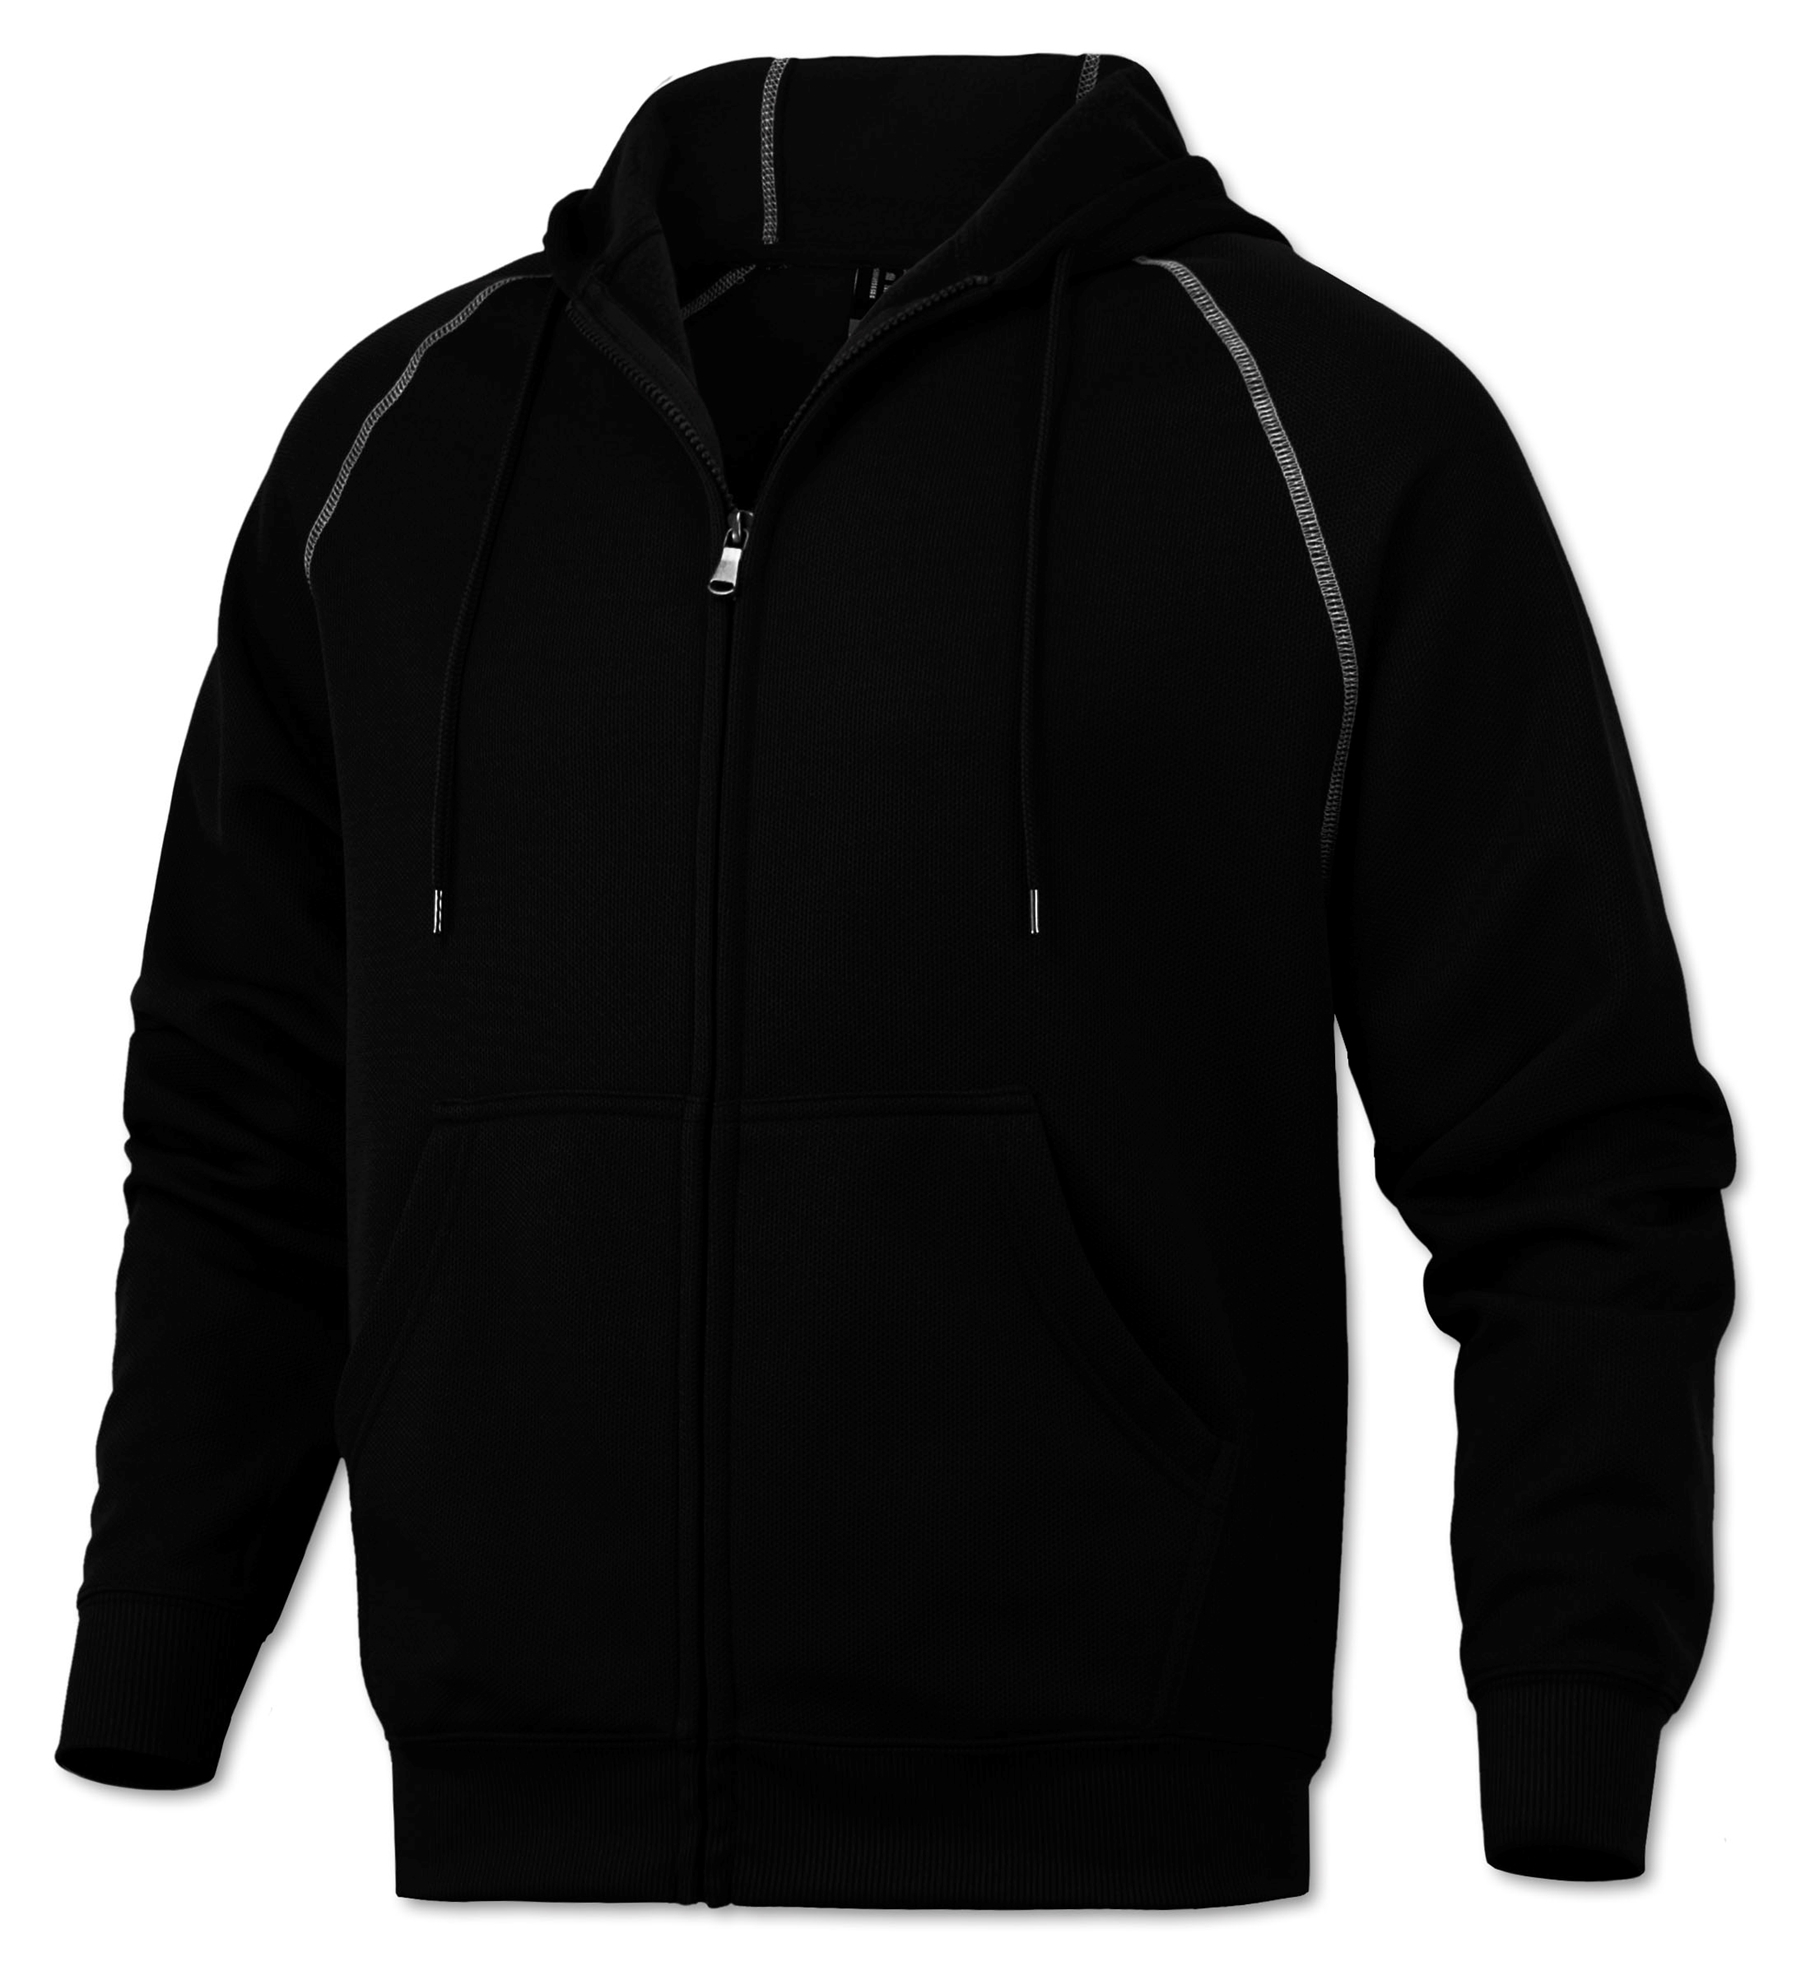 BAW Athletic Wear F250 - Adult Full-Zip Hooded Sweatshirt